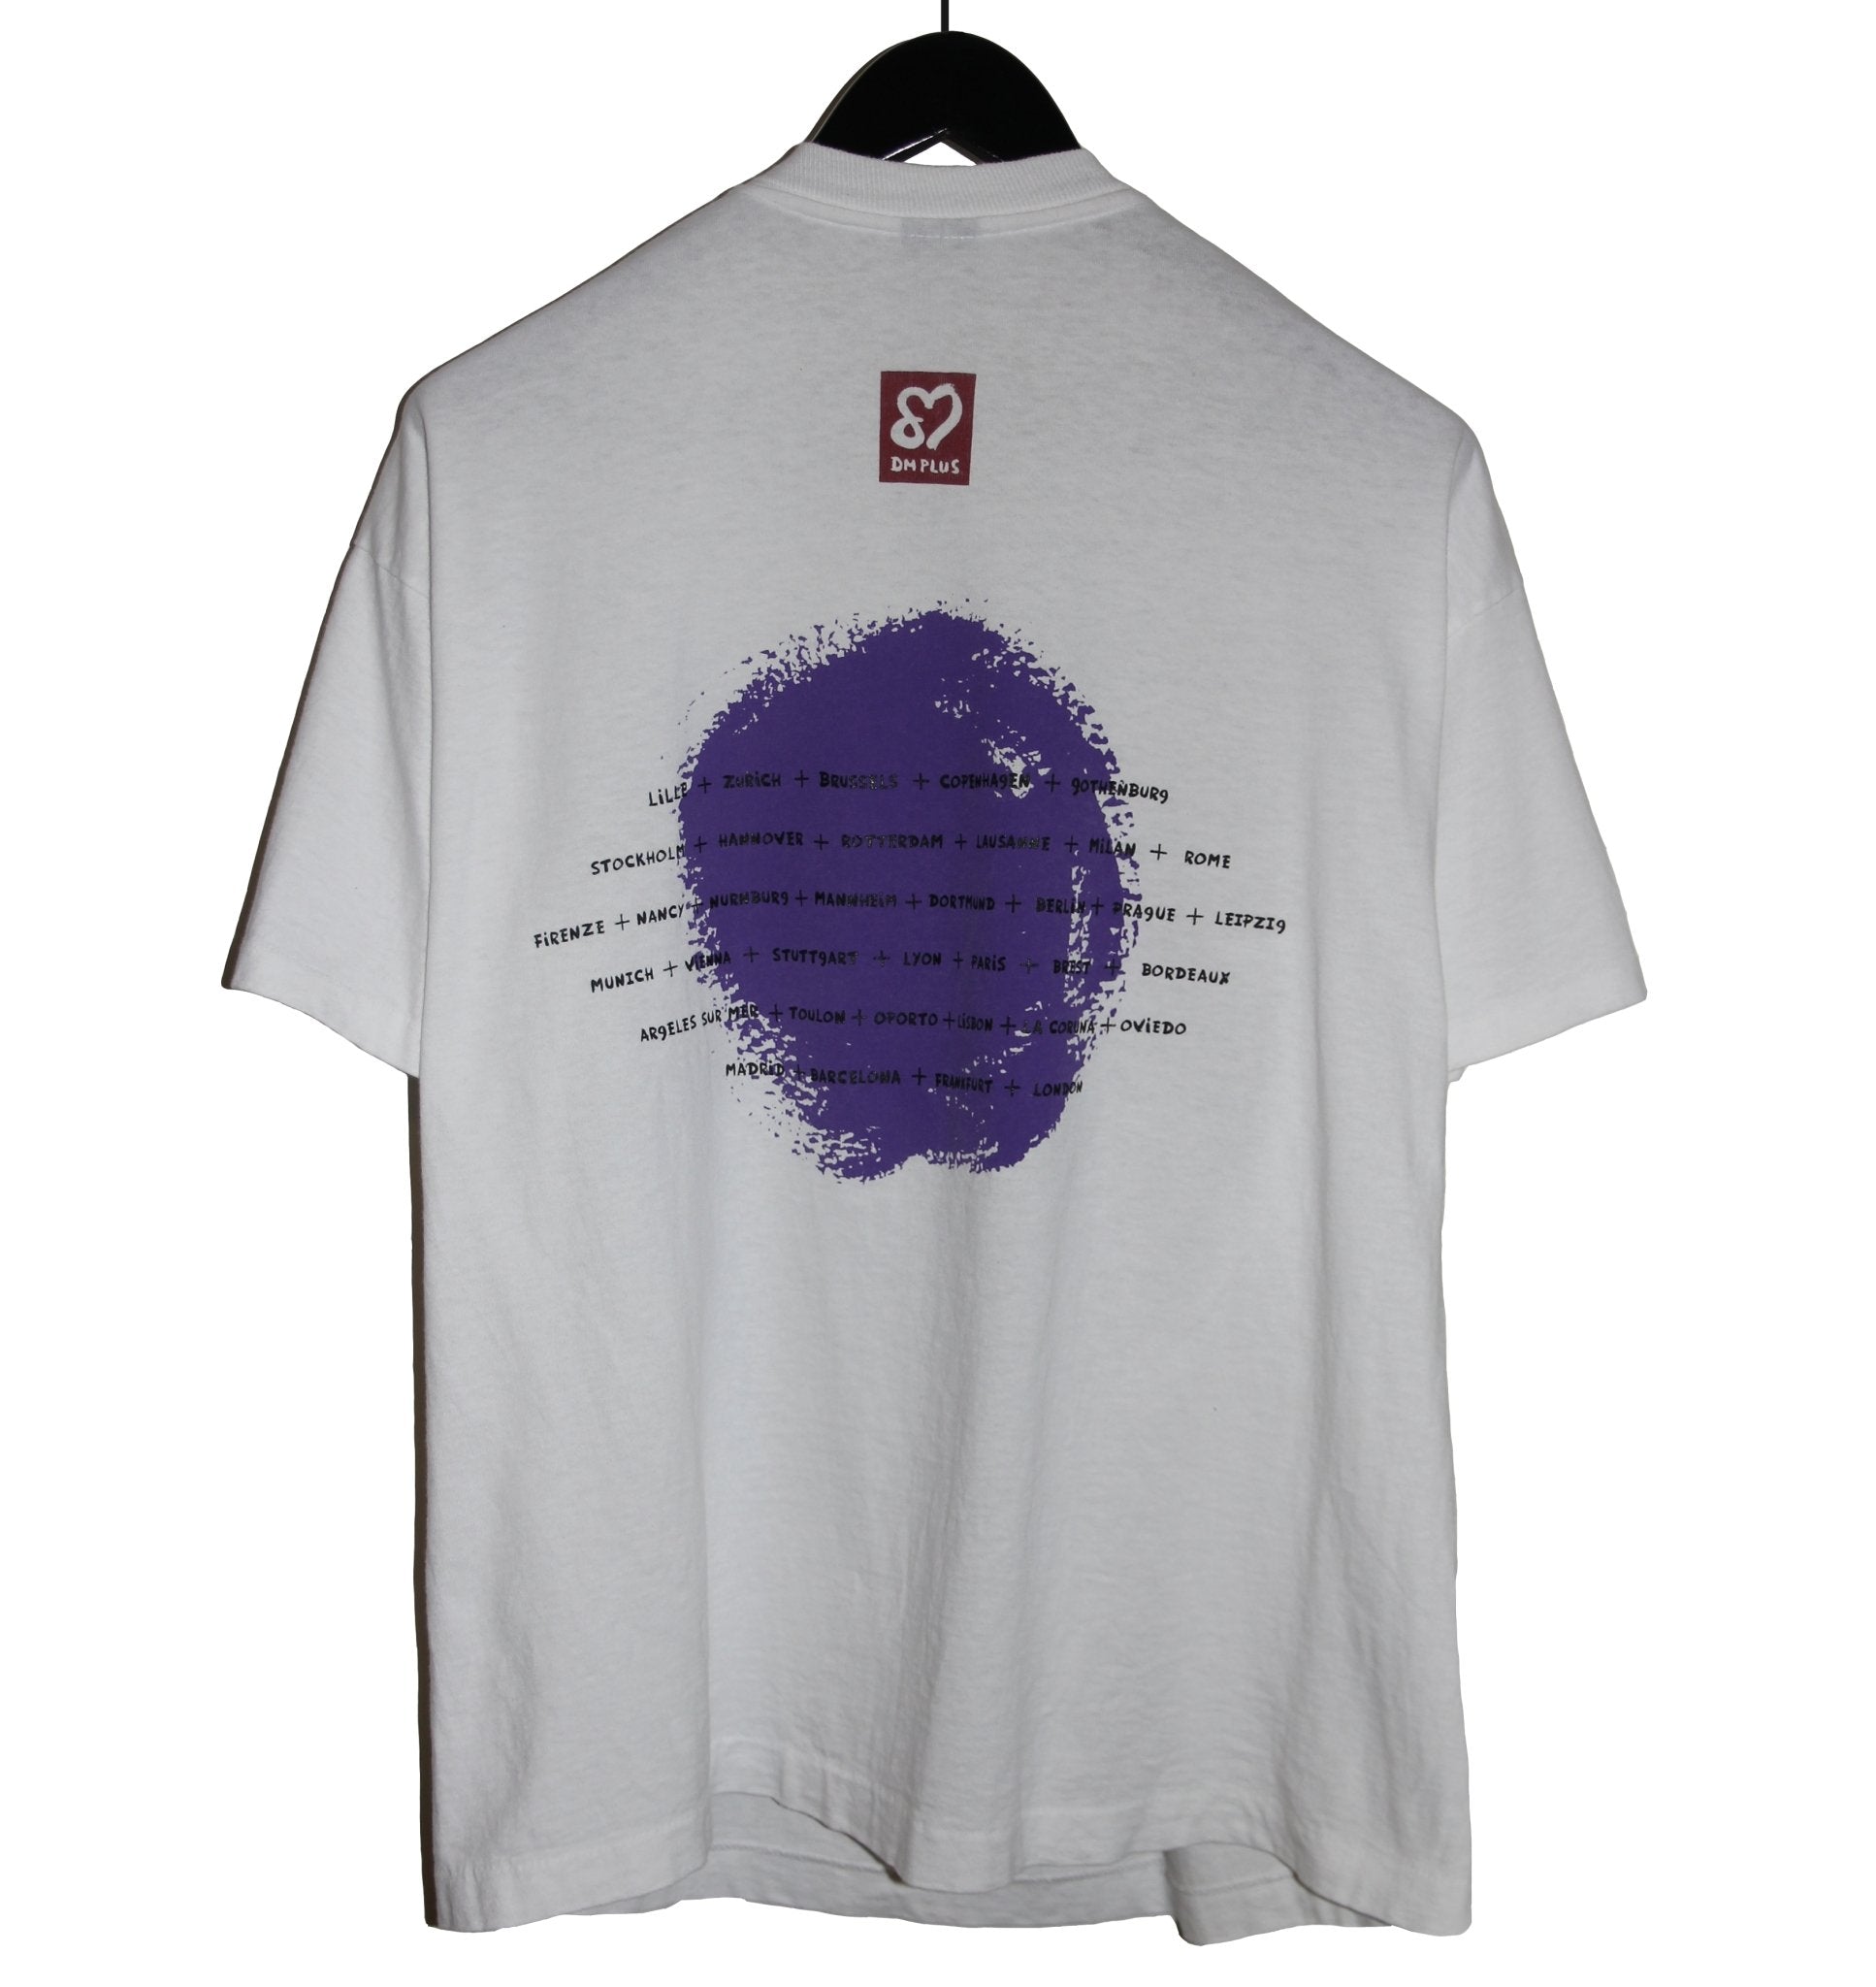 Depeche Mode 1999 Shirt - Faded AU